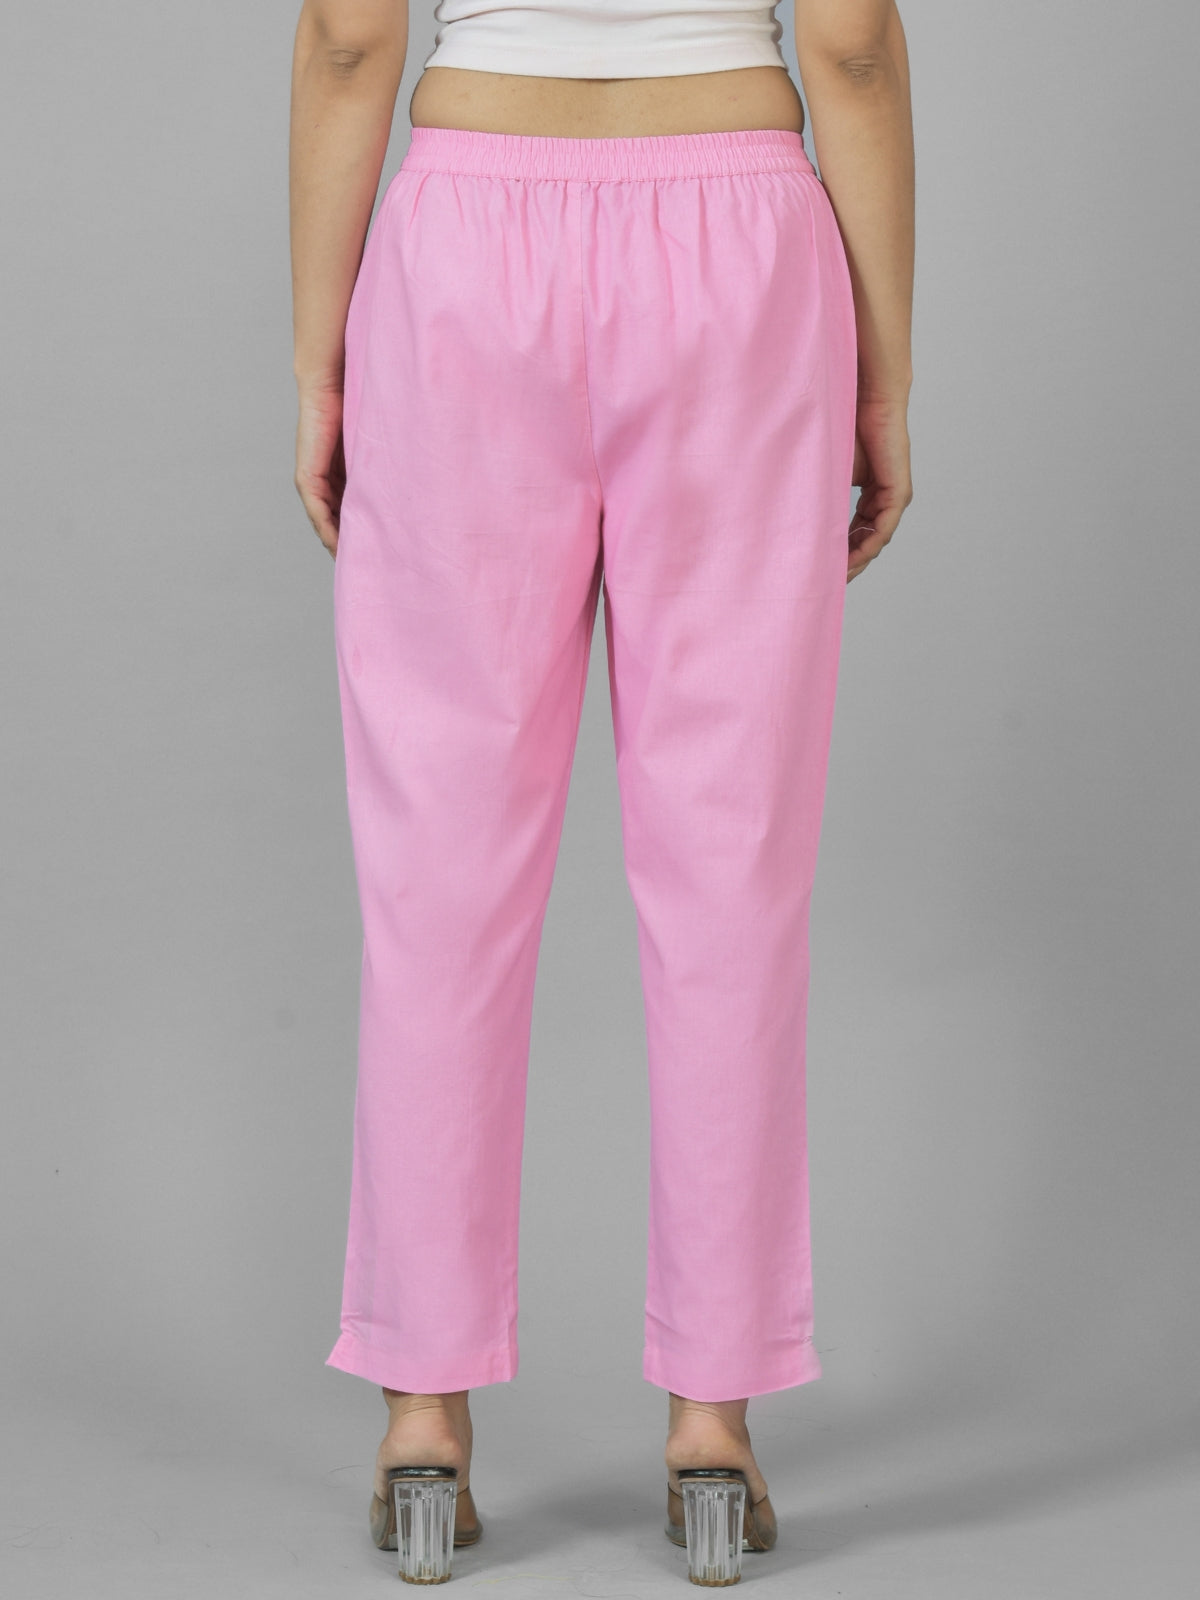 Quaclo Womens Pink Regular Fit Fully Elastic Cotton Trouser